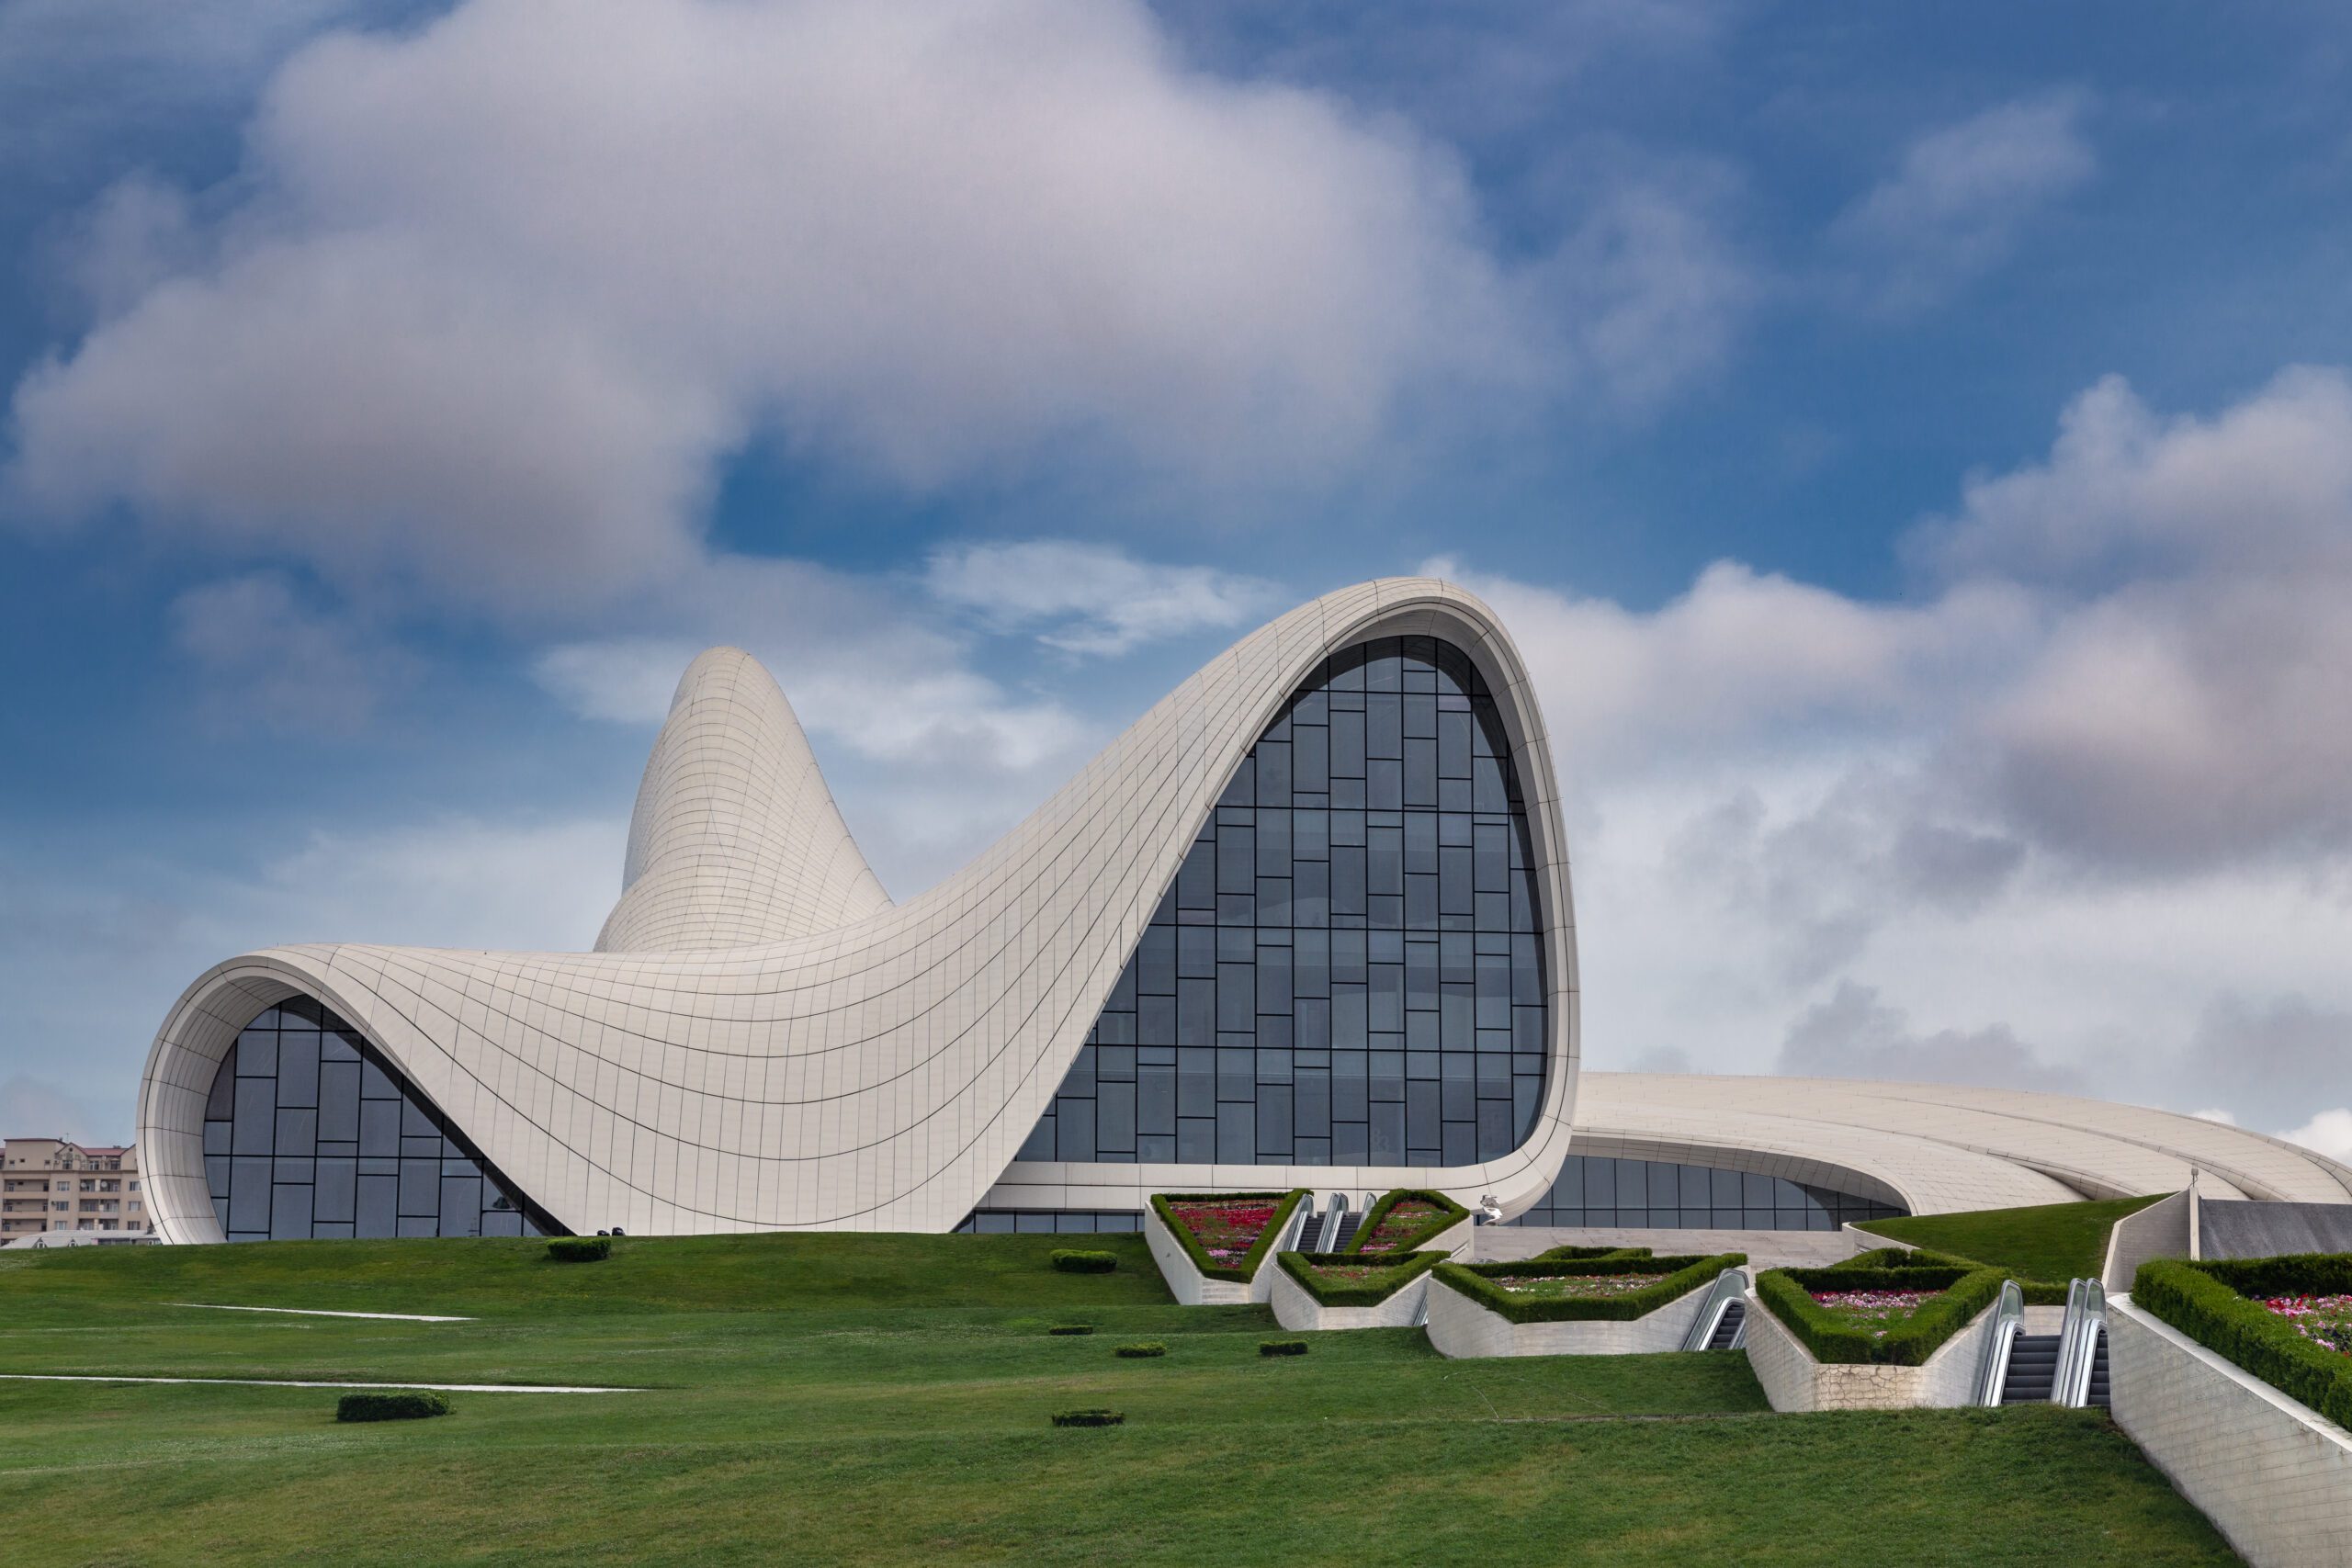 heydar-aliyev-center-building-with-curved-lines-by-architect-zaha-hadid-daylight-baku-azerbaijan